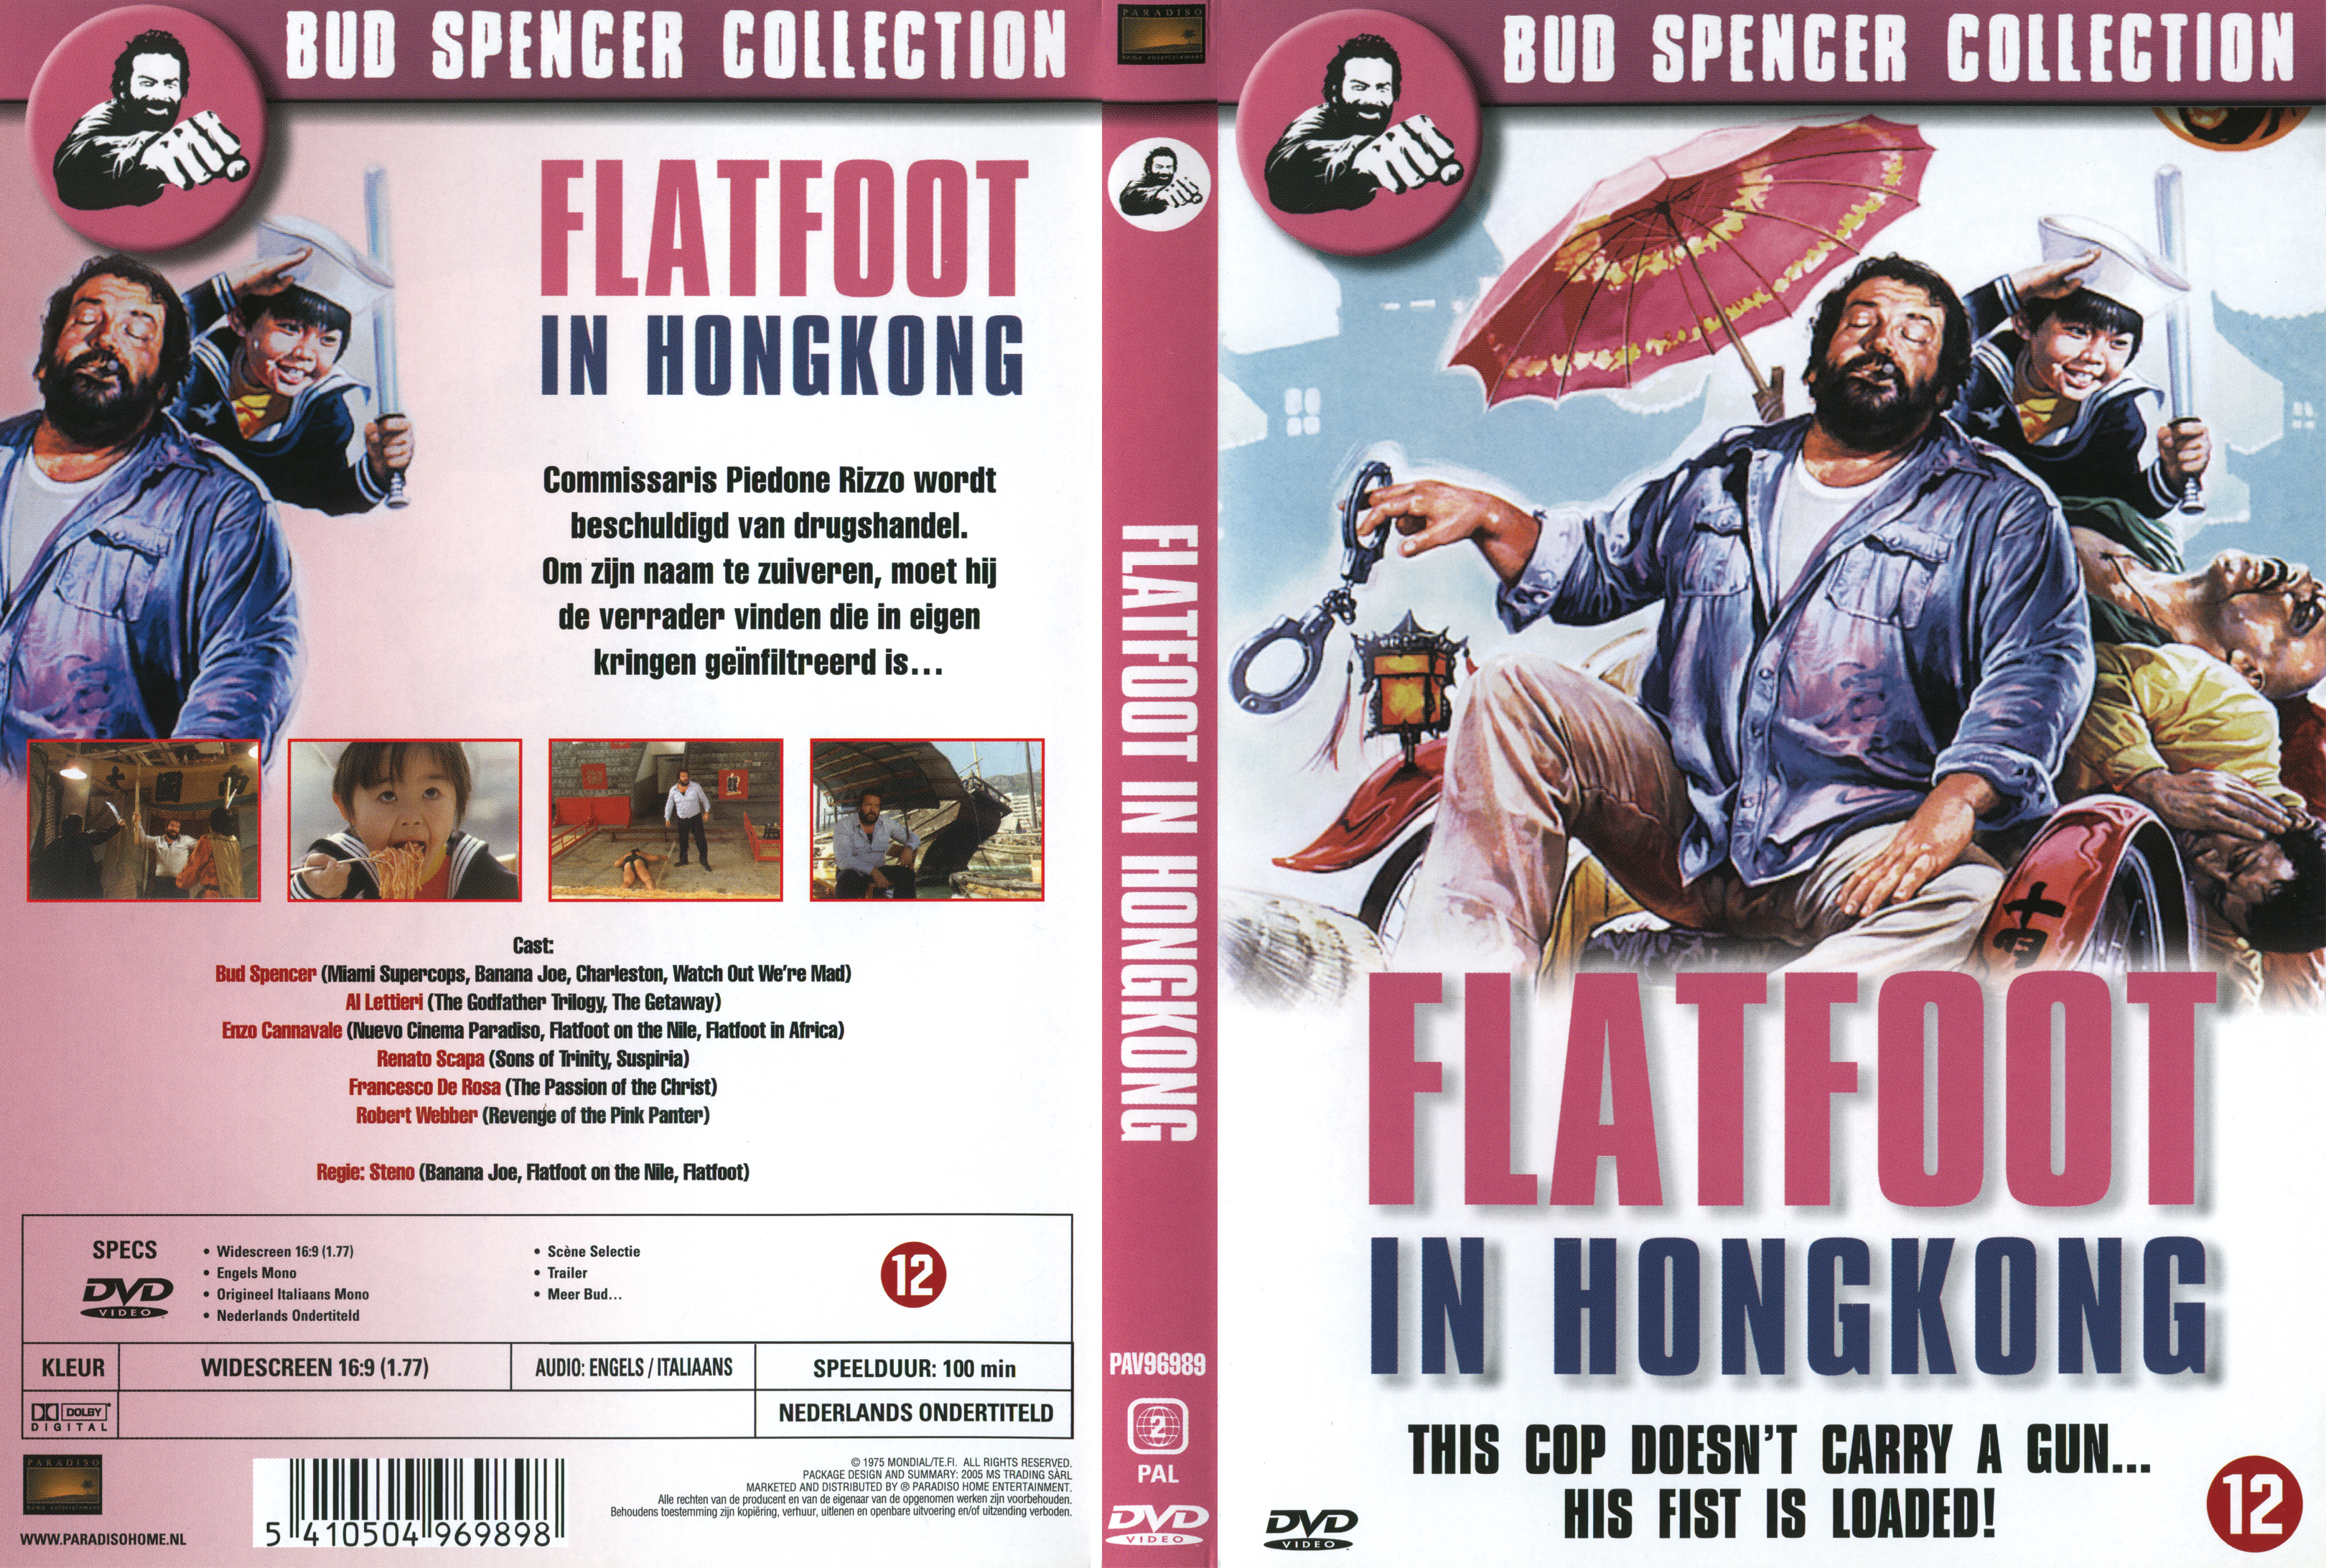 Bud Spencer Flatfoot in HongKong